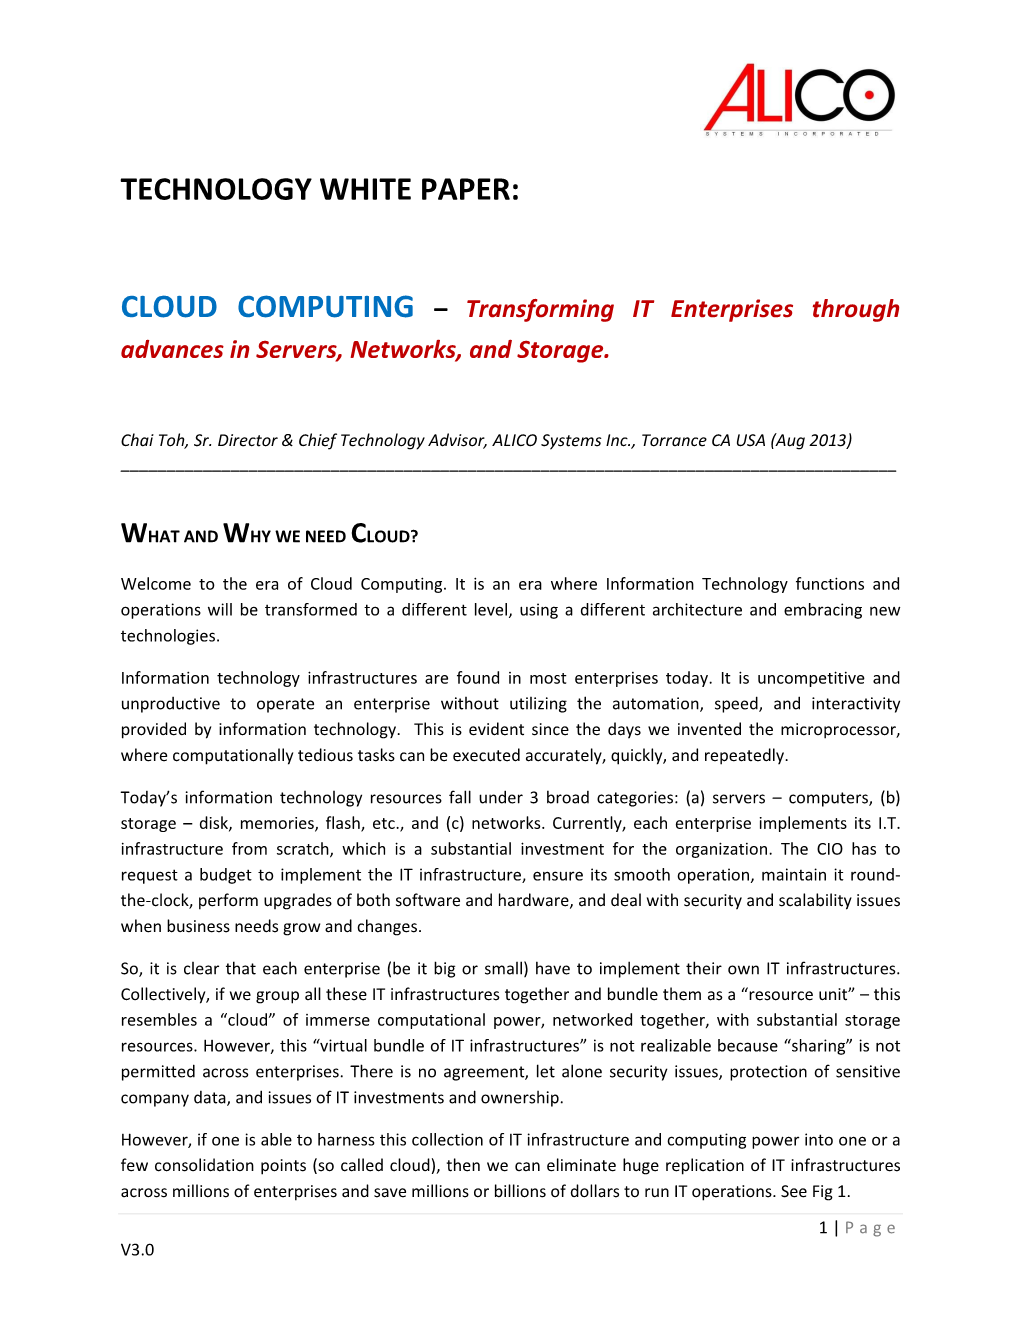 Technology White Paper